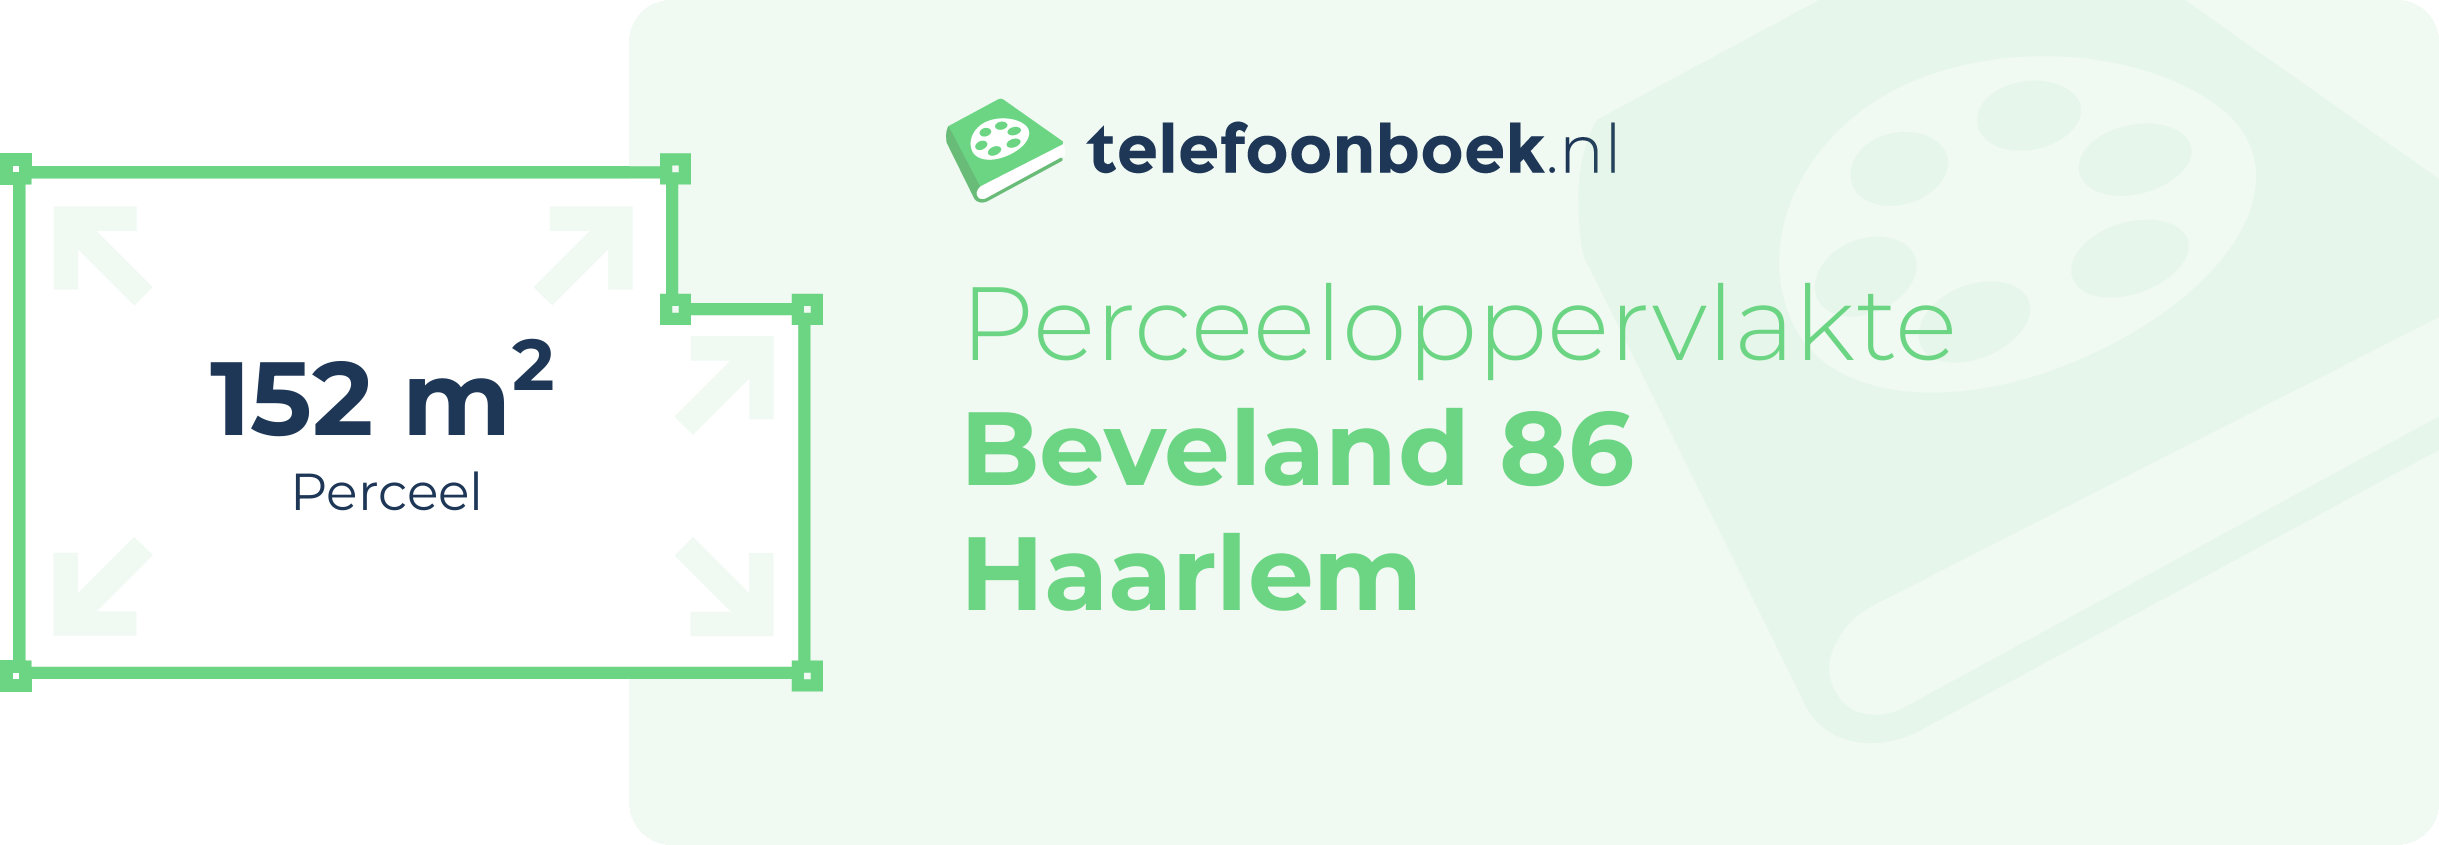 Perceeloppervlakte Beveland 86 Haarlem